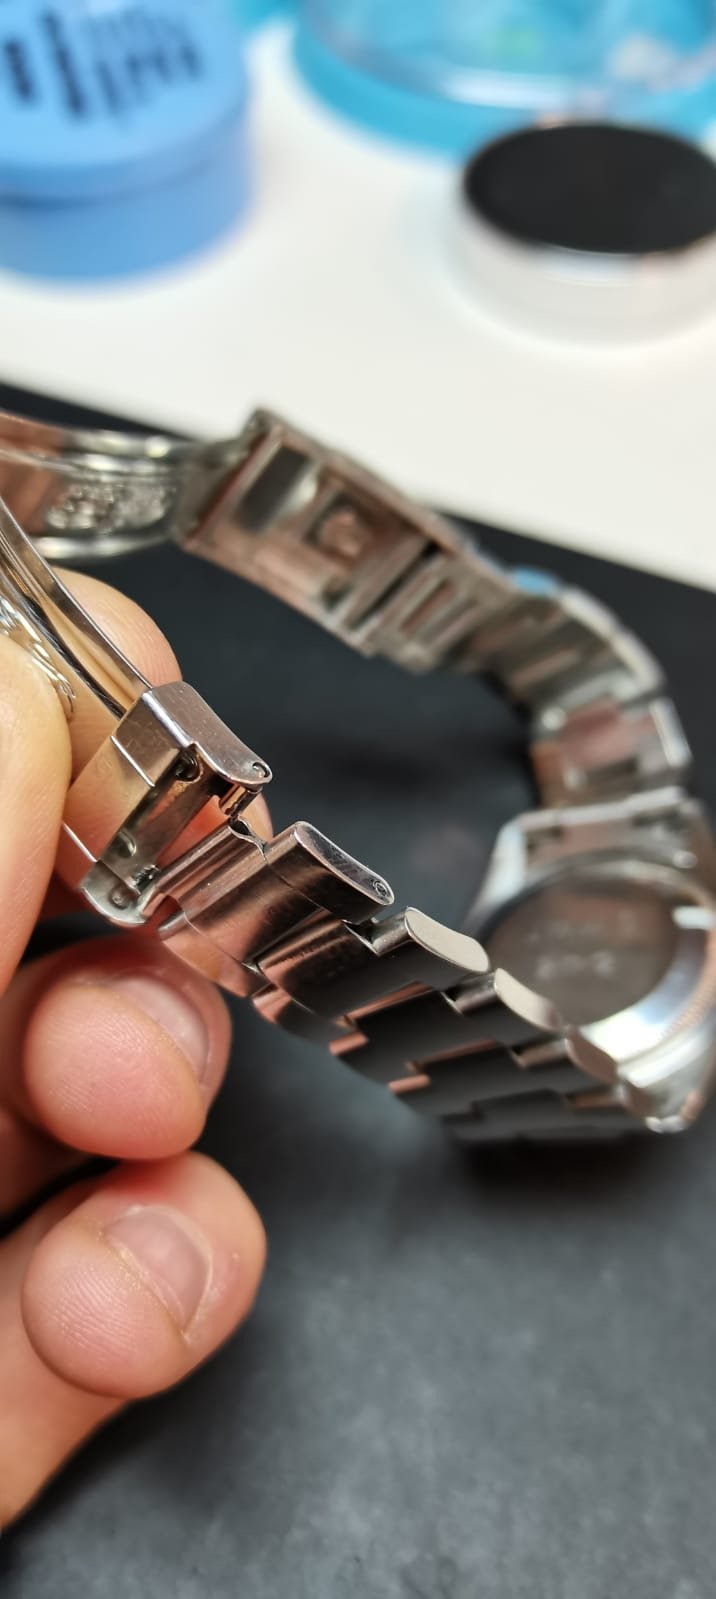 Rolex bracelet repair same day service.jpeg